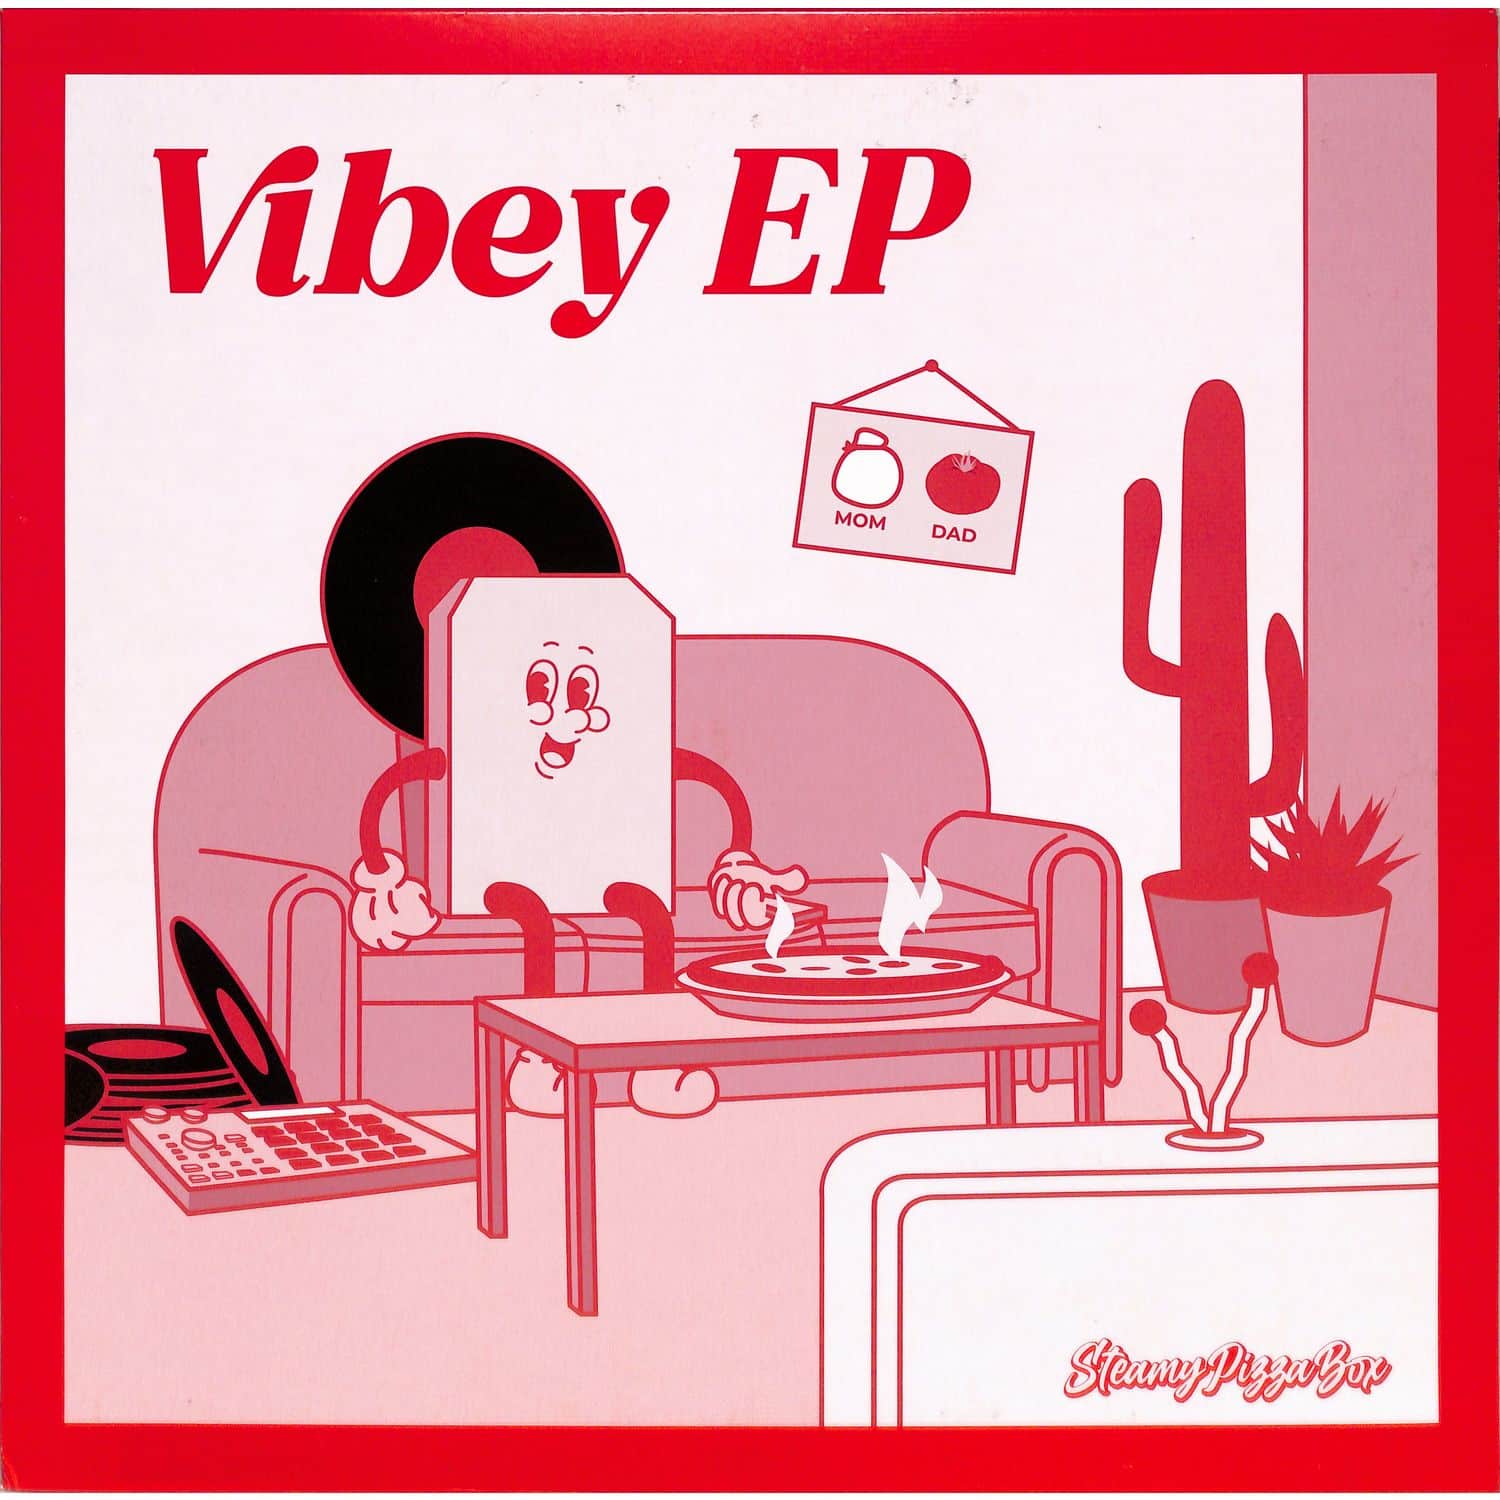 Steamy Pizza Box - VIBEY EP 